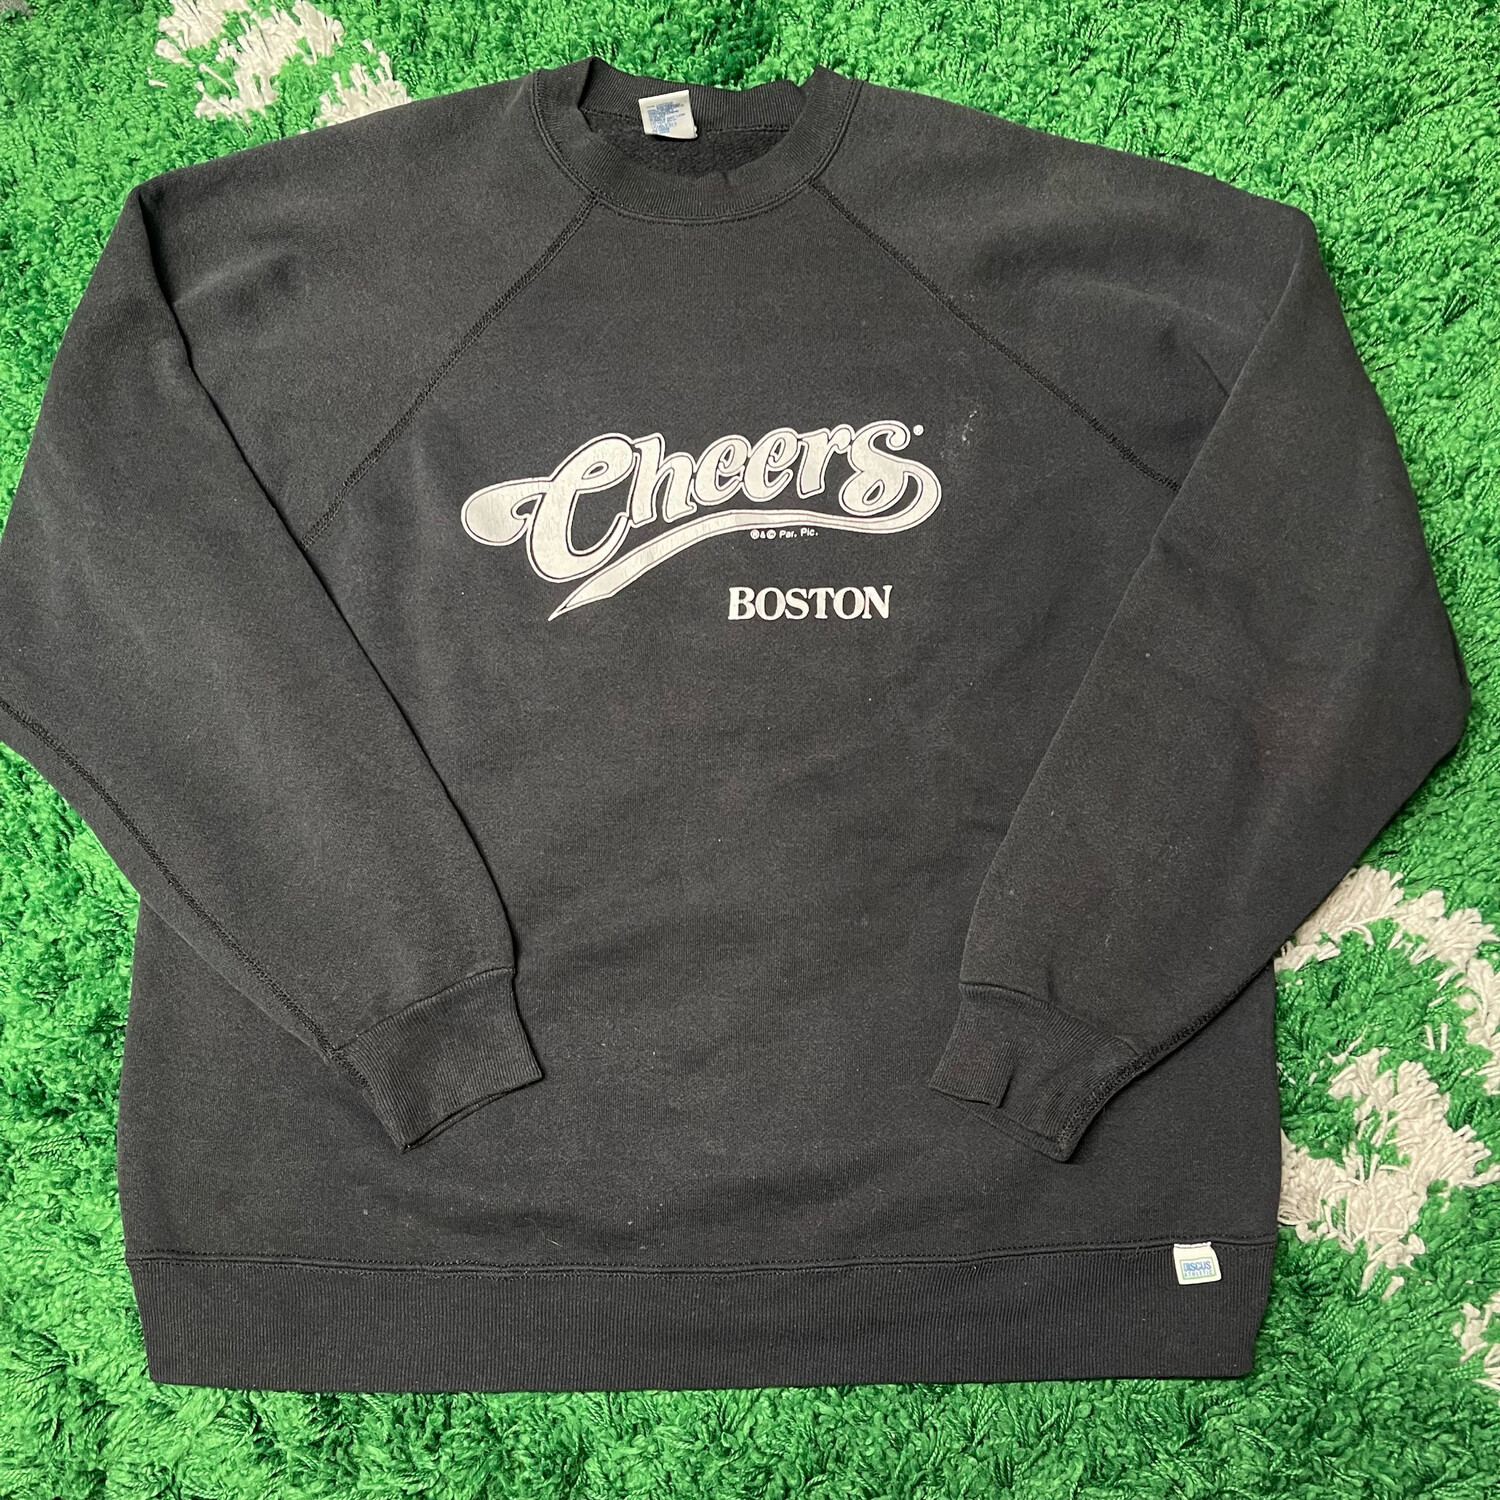 Cheers Boston Crewneck Sweater Size XL